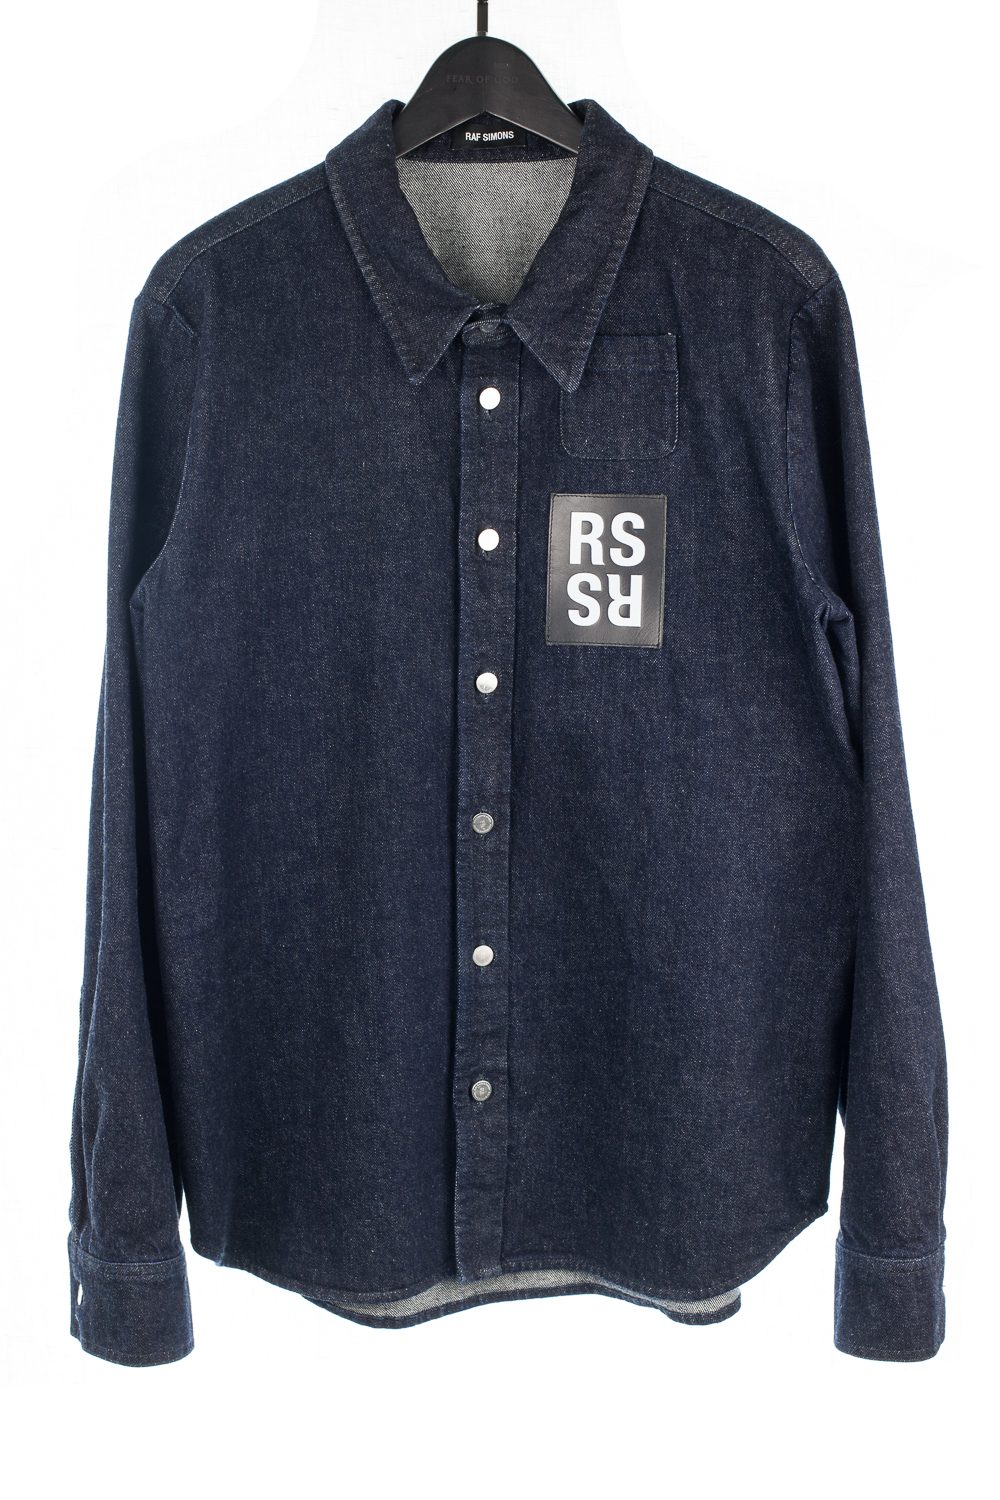 “RS” Patchwork Heavy Denim Shirt Jacket